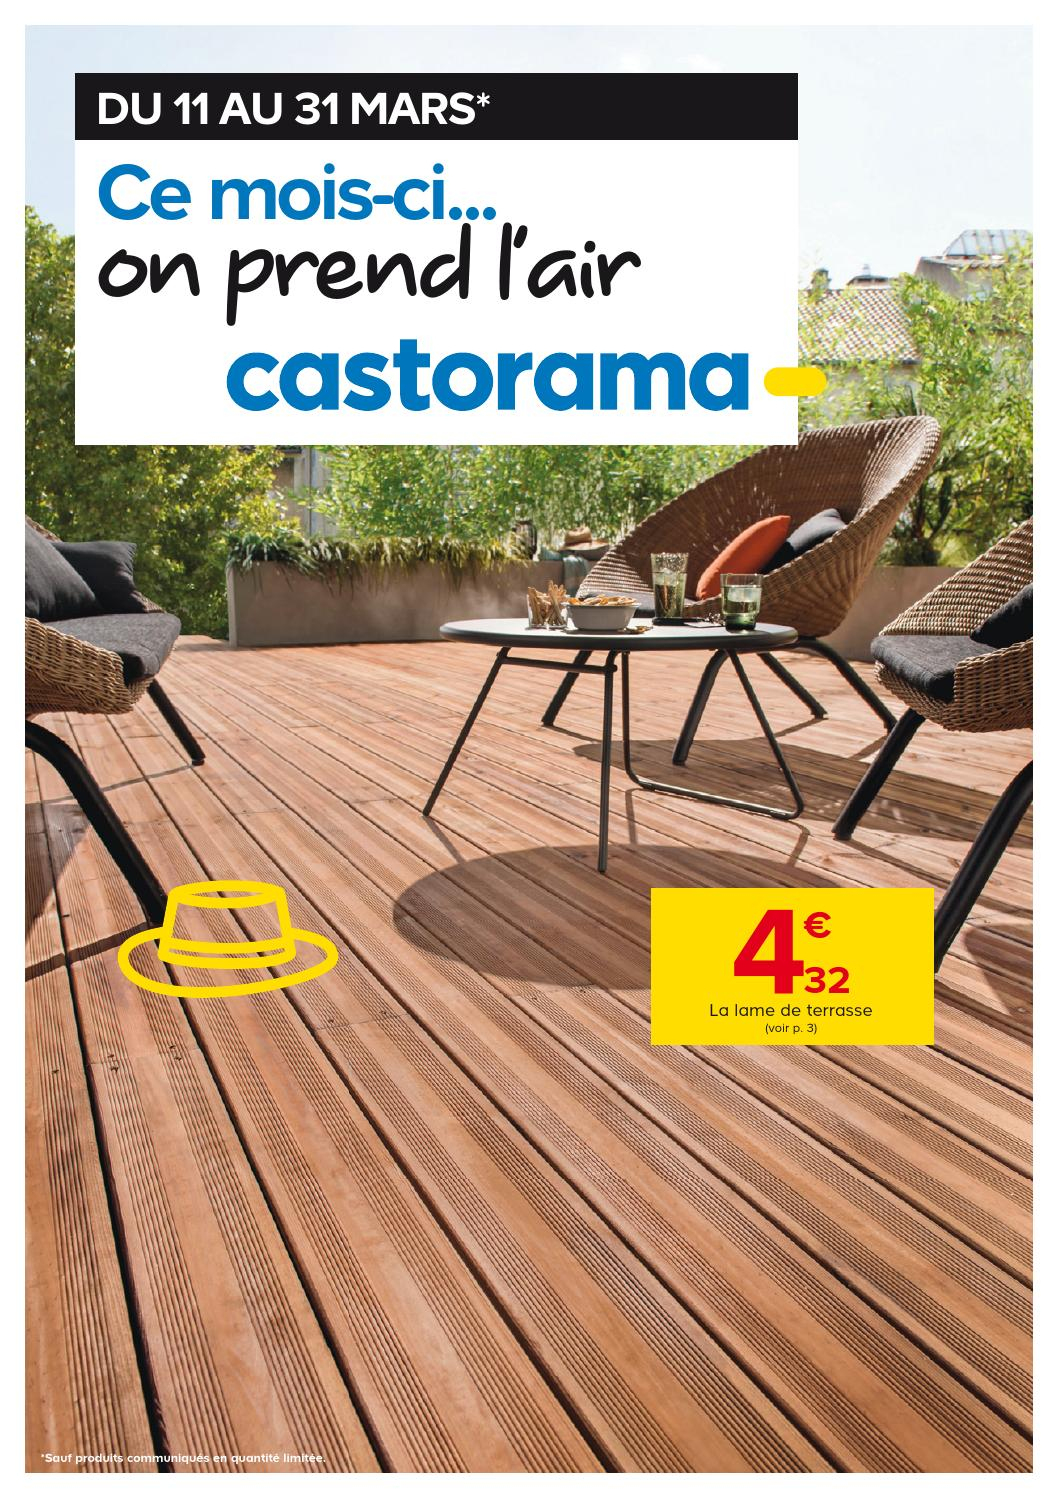 Castorama Catalogue 11 31Mars2015 By Promocatalogues - Issuu pour Plot Reglable Terrasse Bois Castorama